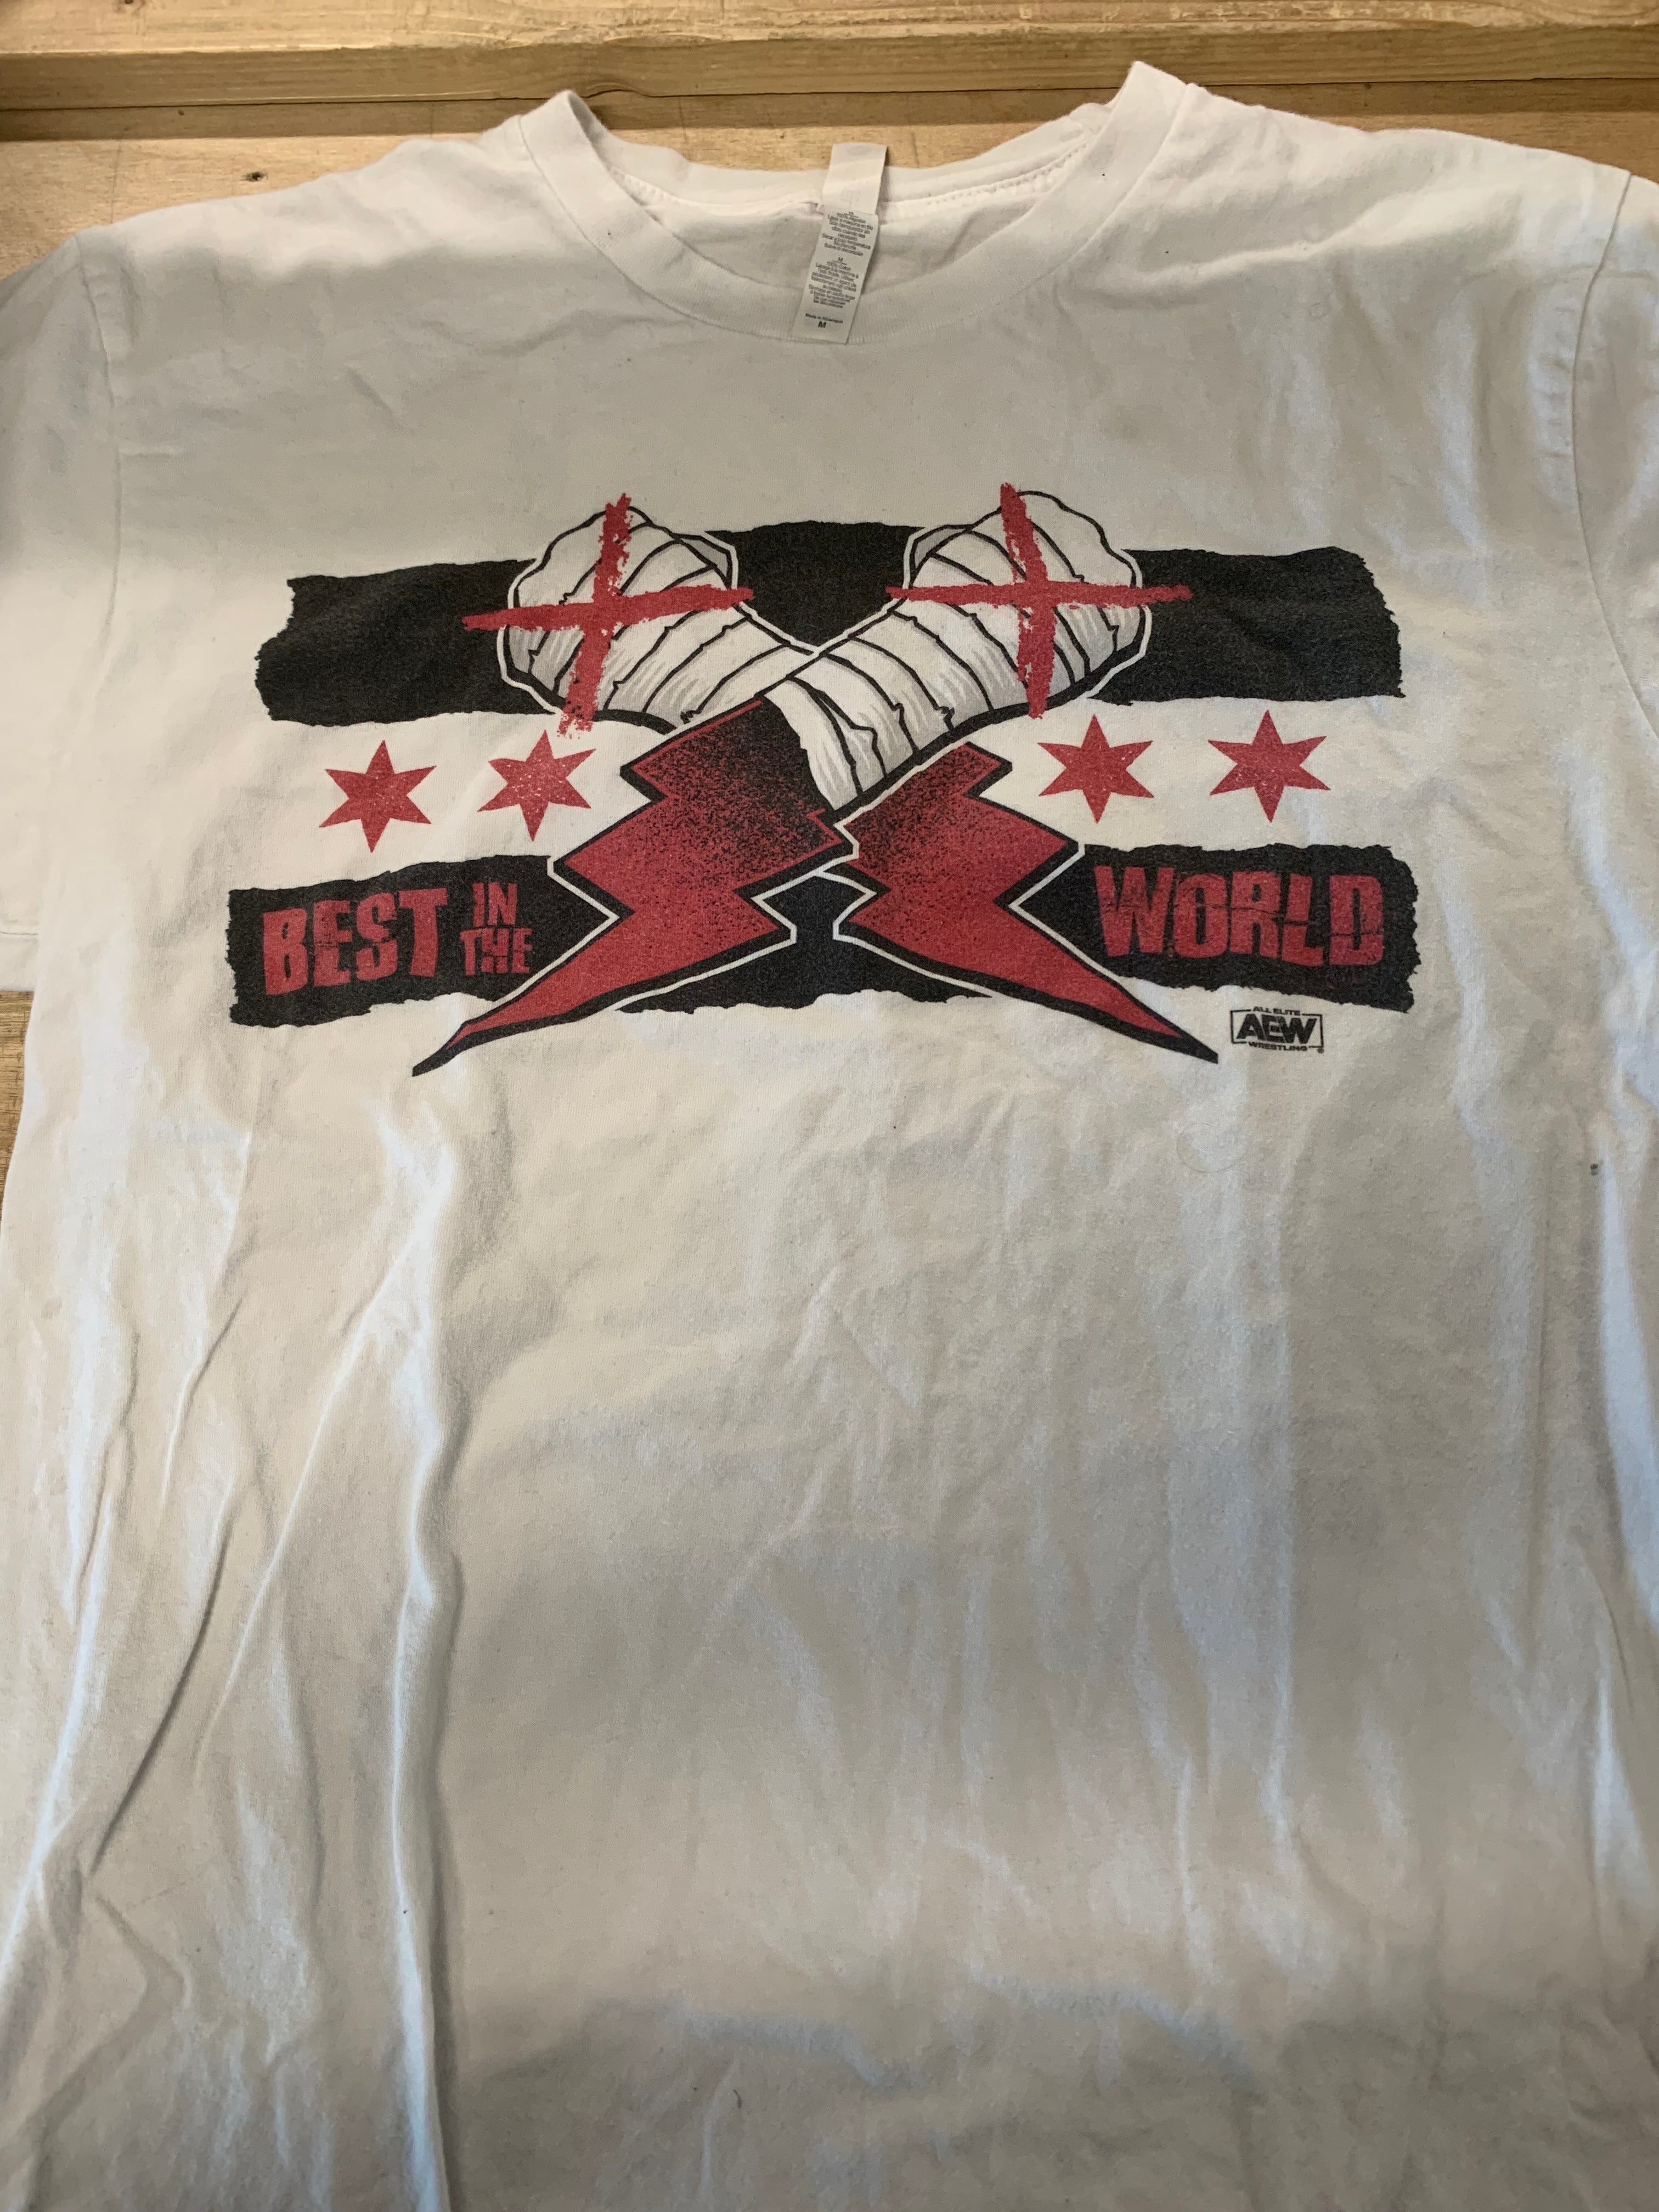 AEW Best In The World T-Shirt, White, M